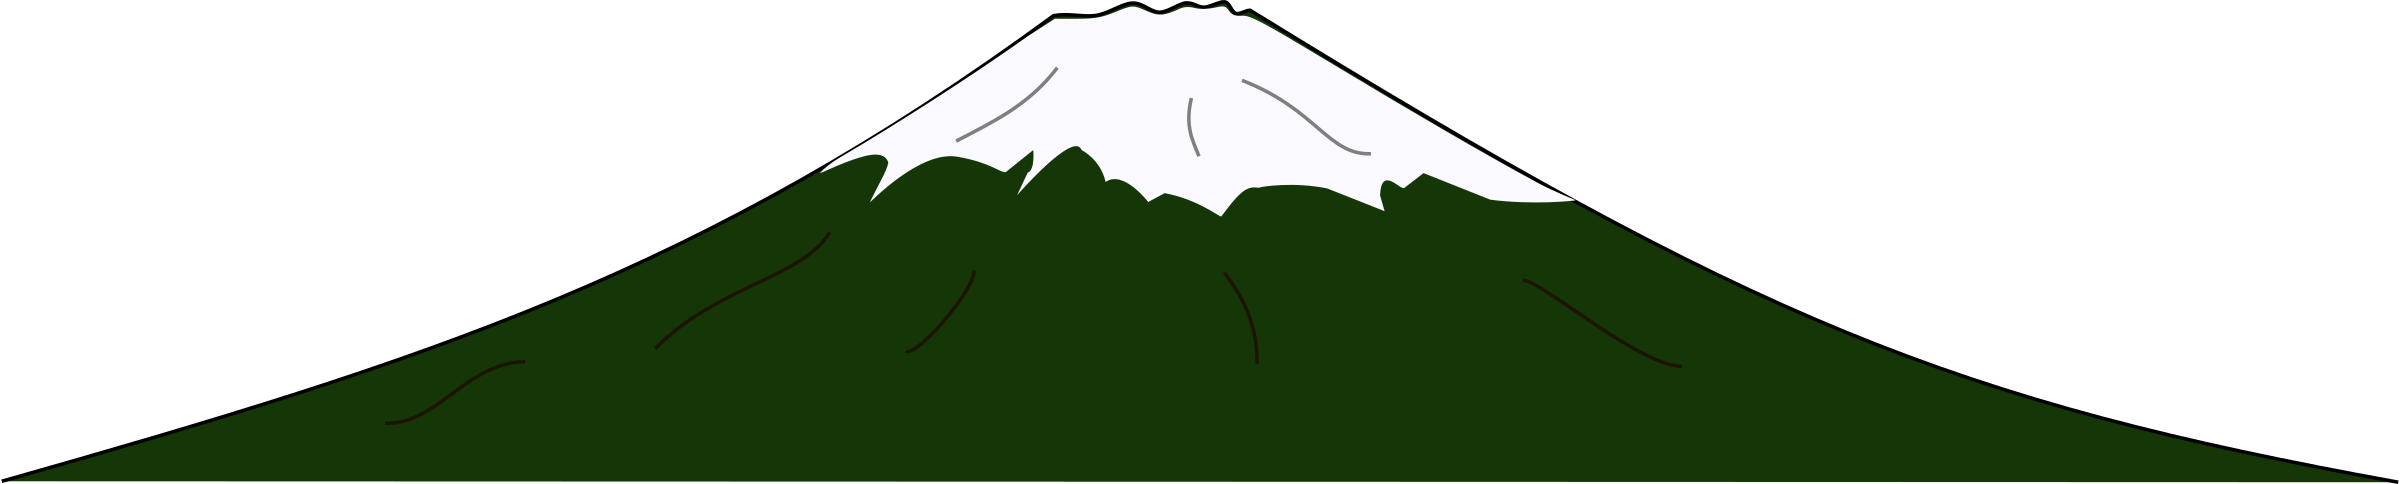 Big Image - Green Mountain Clip Art (3719x750)